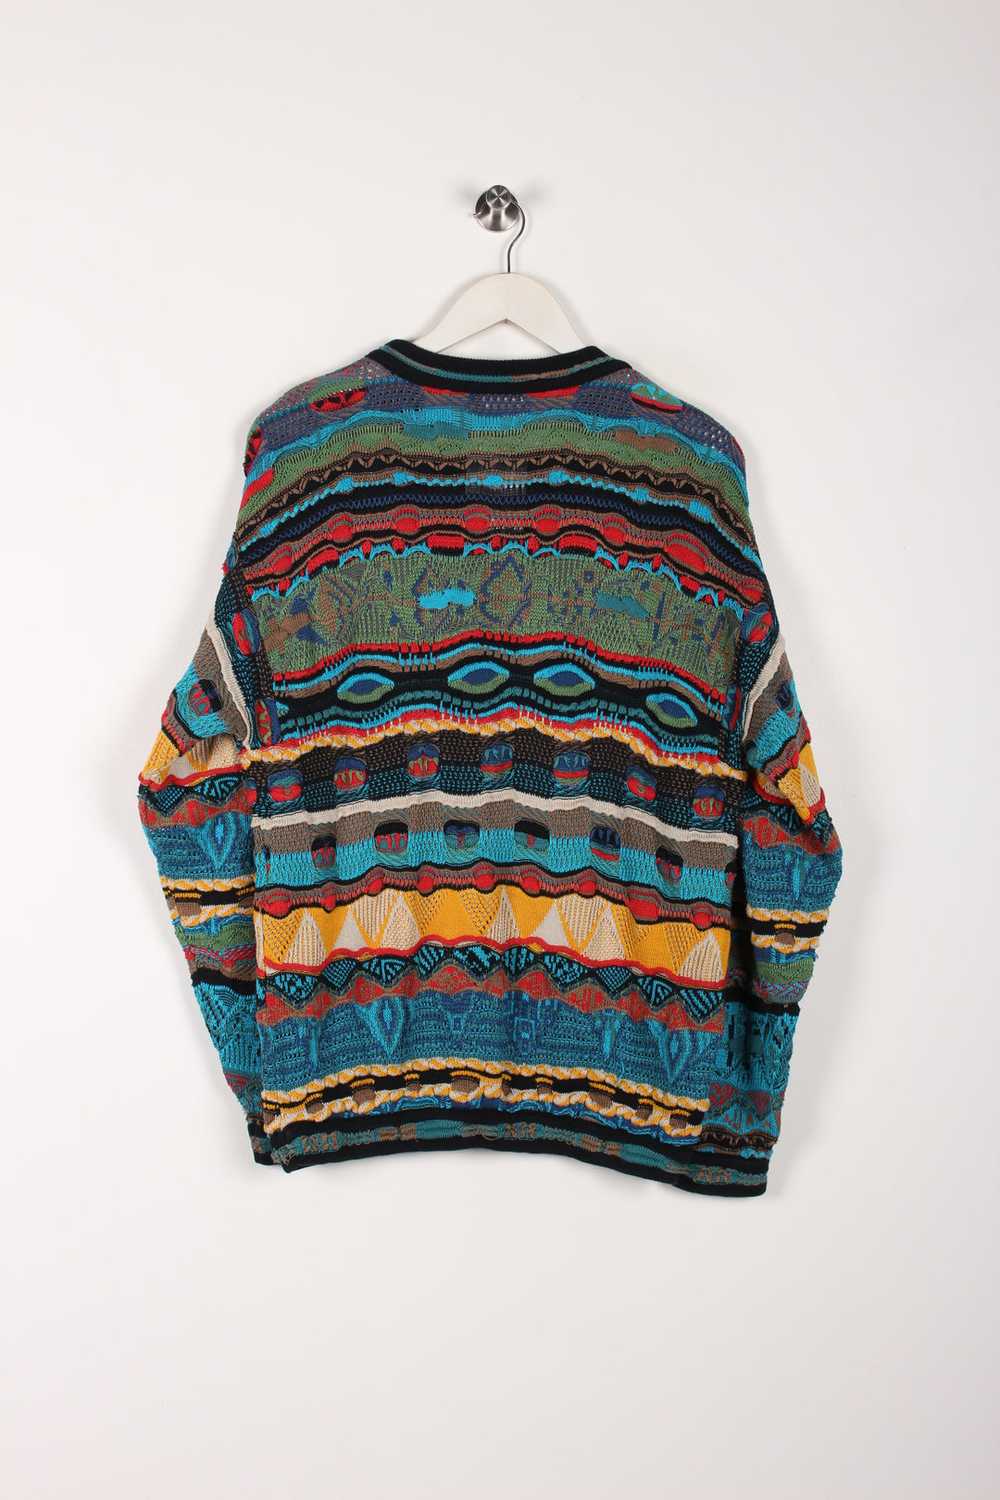 90's Coogi Knitted Sweatshirt Medium - image 3